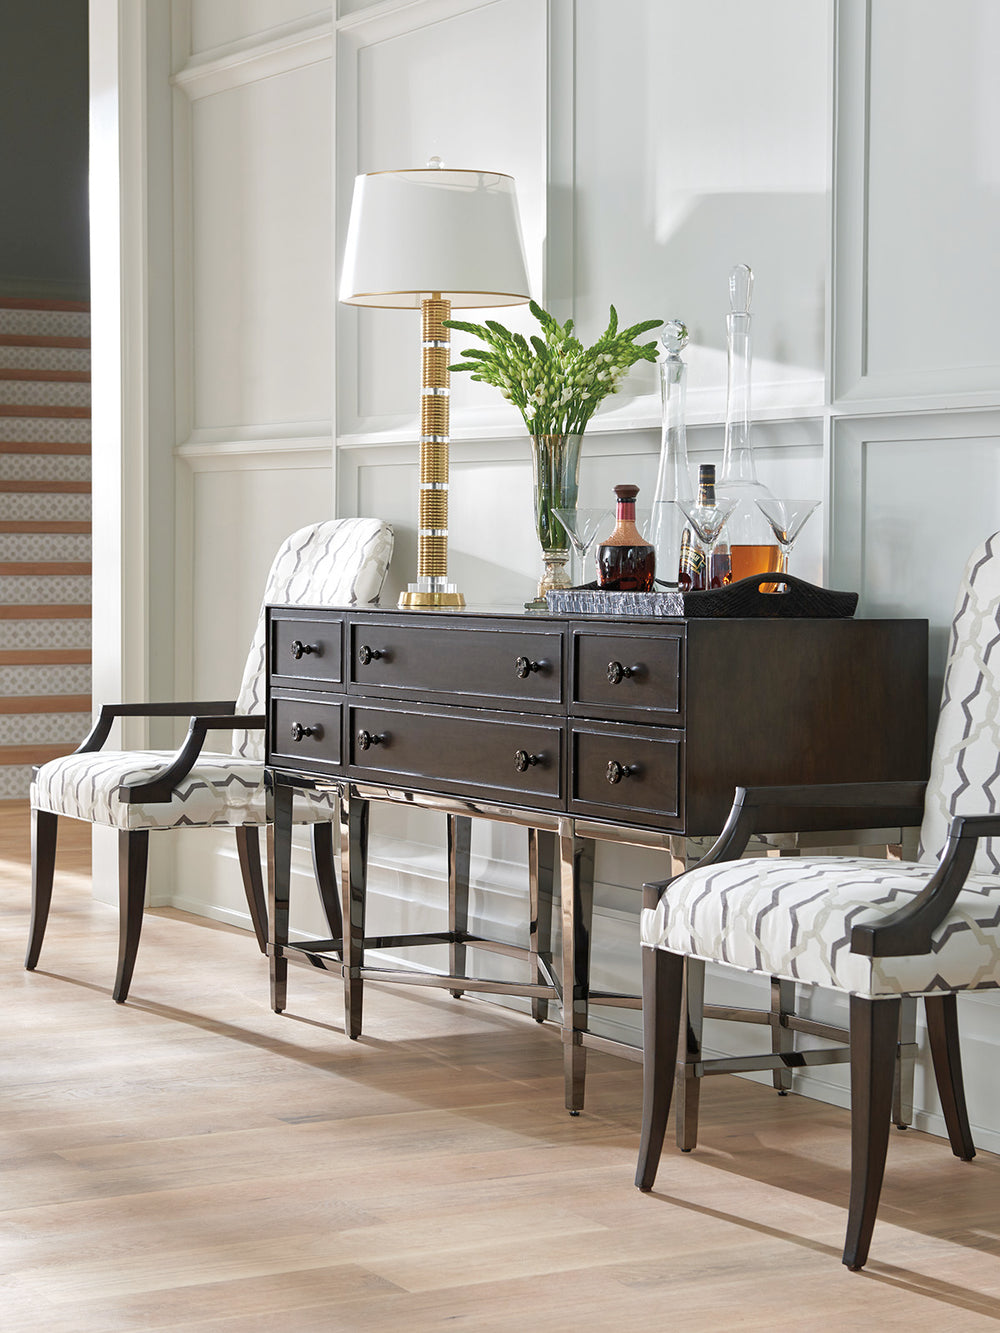 American Home Furniture | Barclay Butera  - Brentwood Fairfax Sideboard